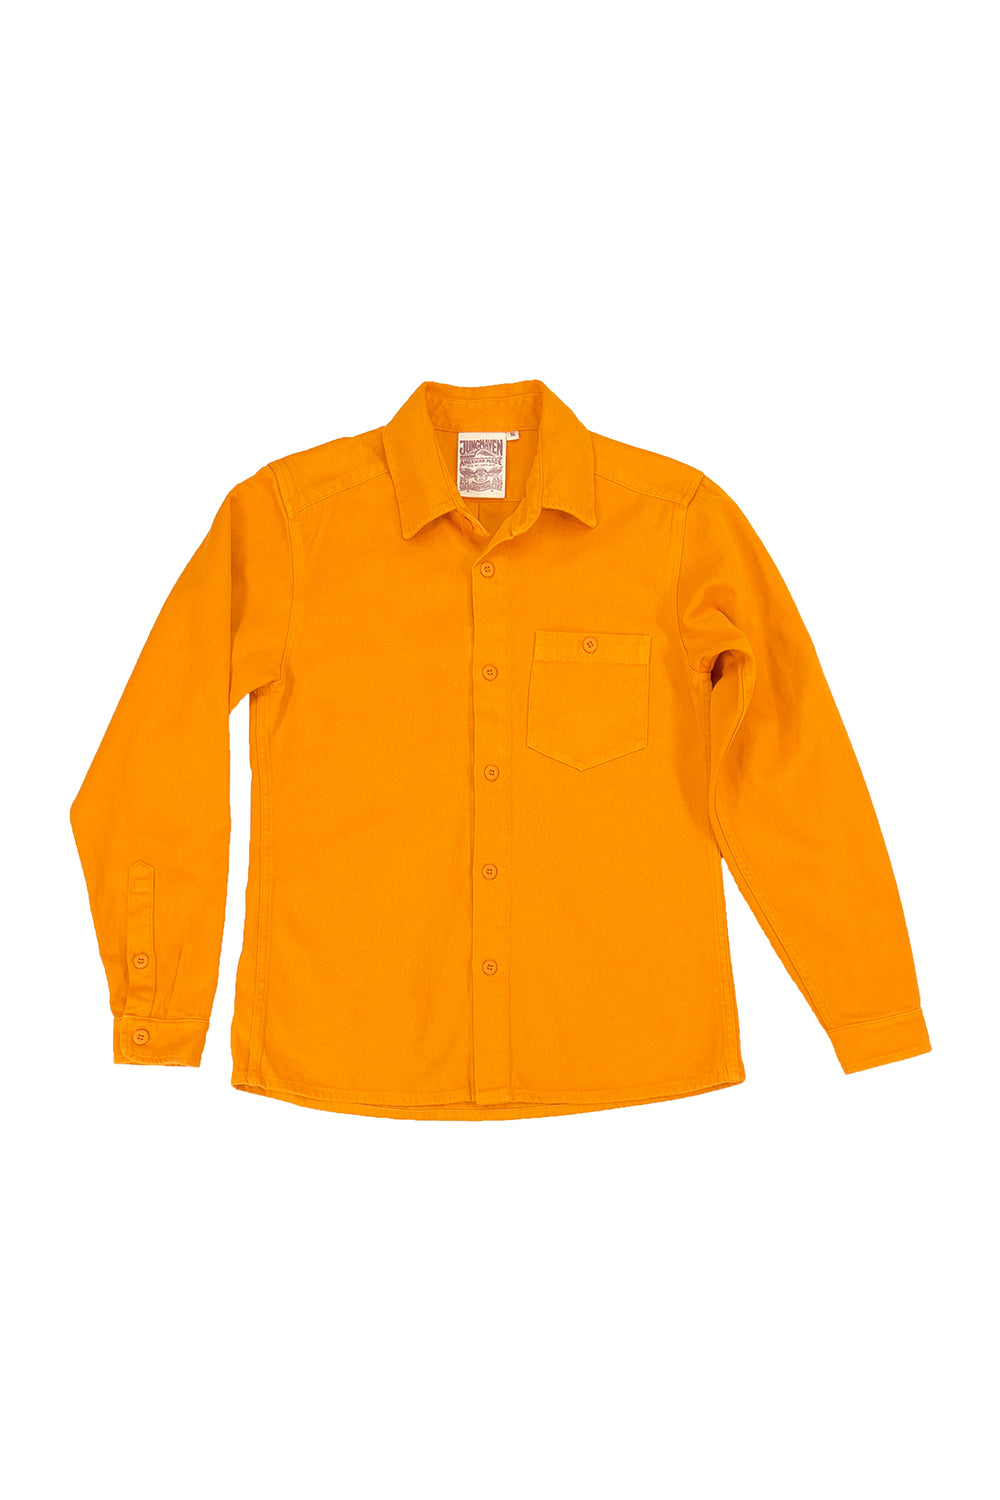 Topanga Shirt | Jungmaven Hemp Clothing & Accessories / Color: Mango Mojito